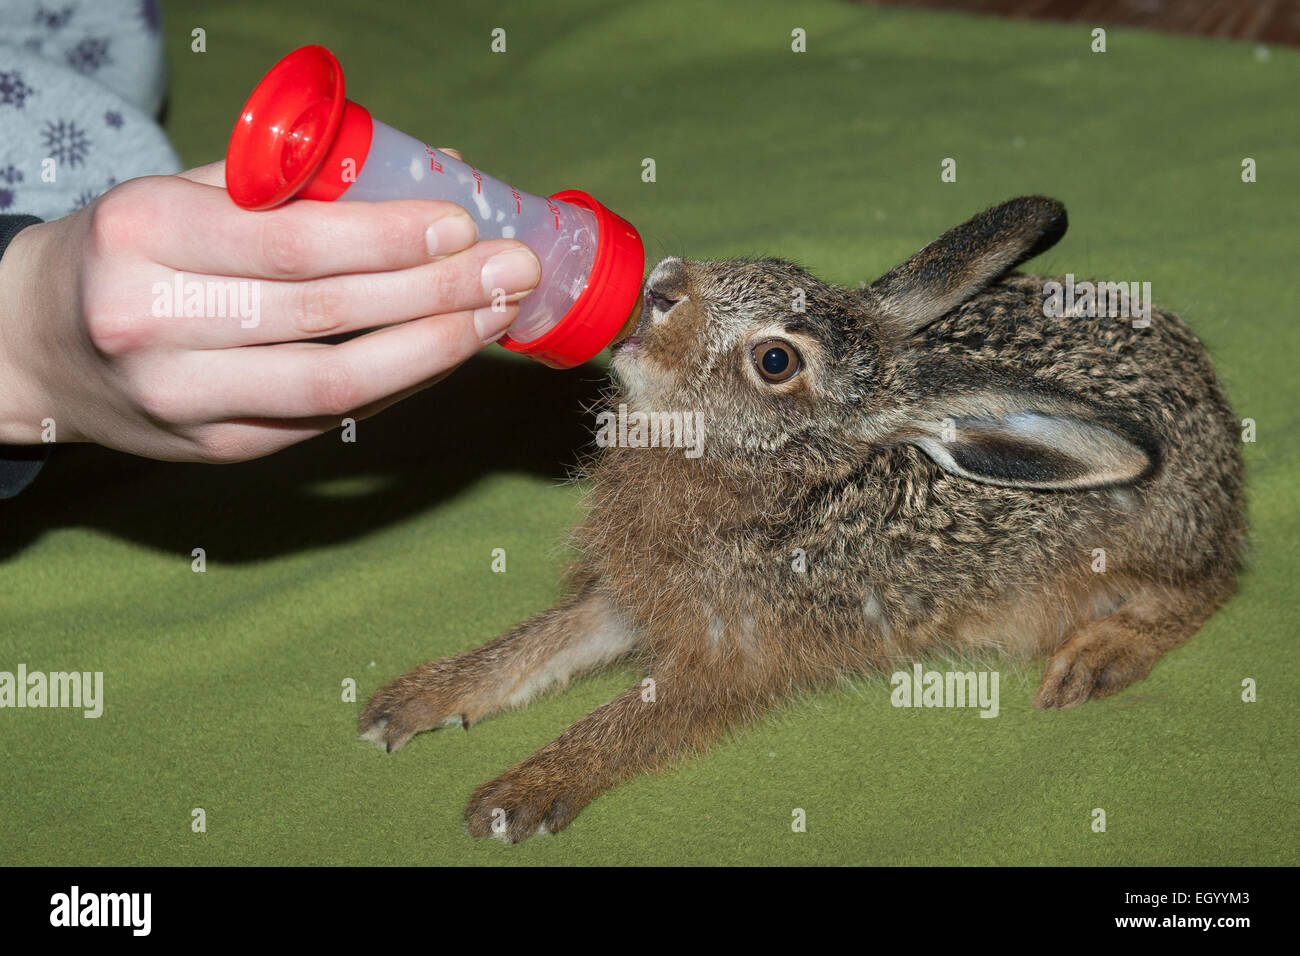 European hare, Brown Hare, hares, animal-rearing, Feldhase, Feld-Hase, Aufzucht, Pflege, Lepus europaeus, Lièvre d'Europe Stock Photo